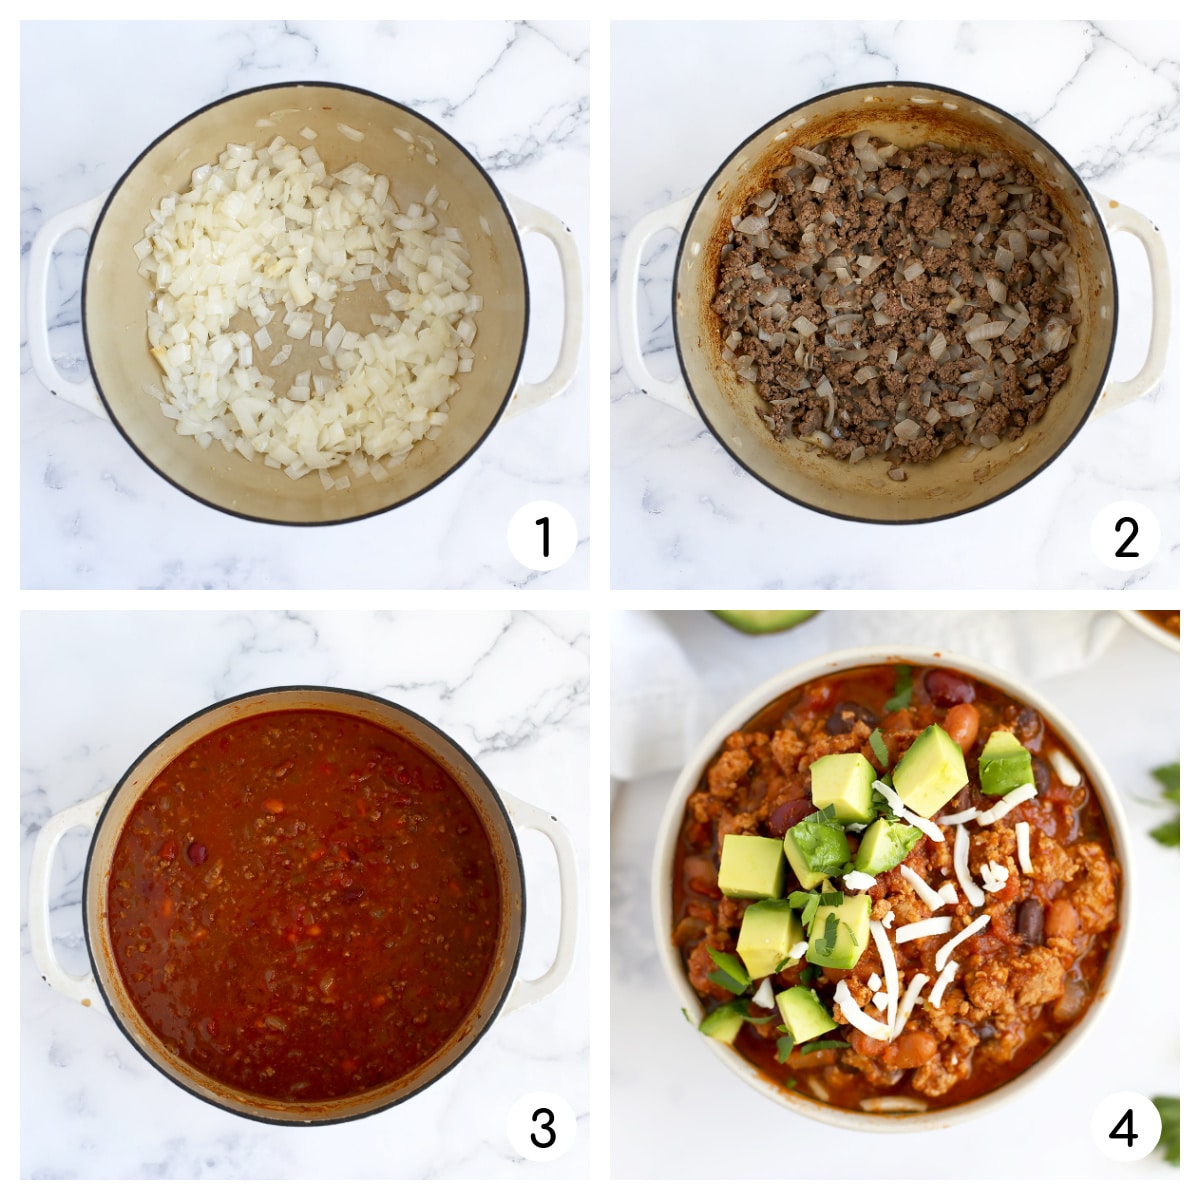 Process shots showing how to make turkey chili.